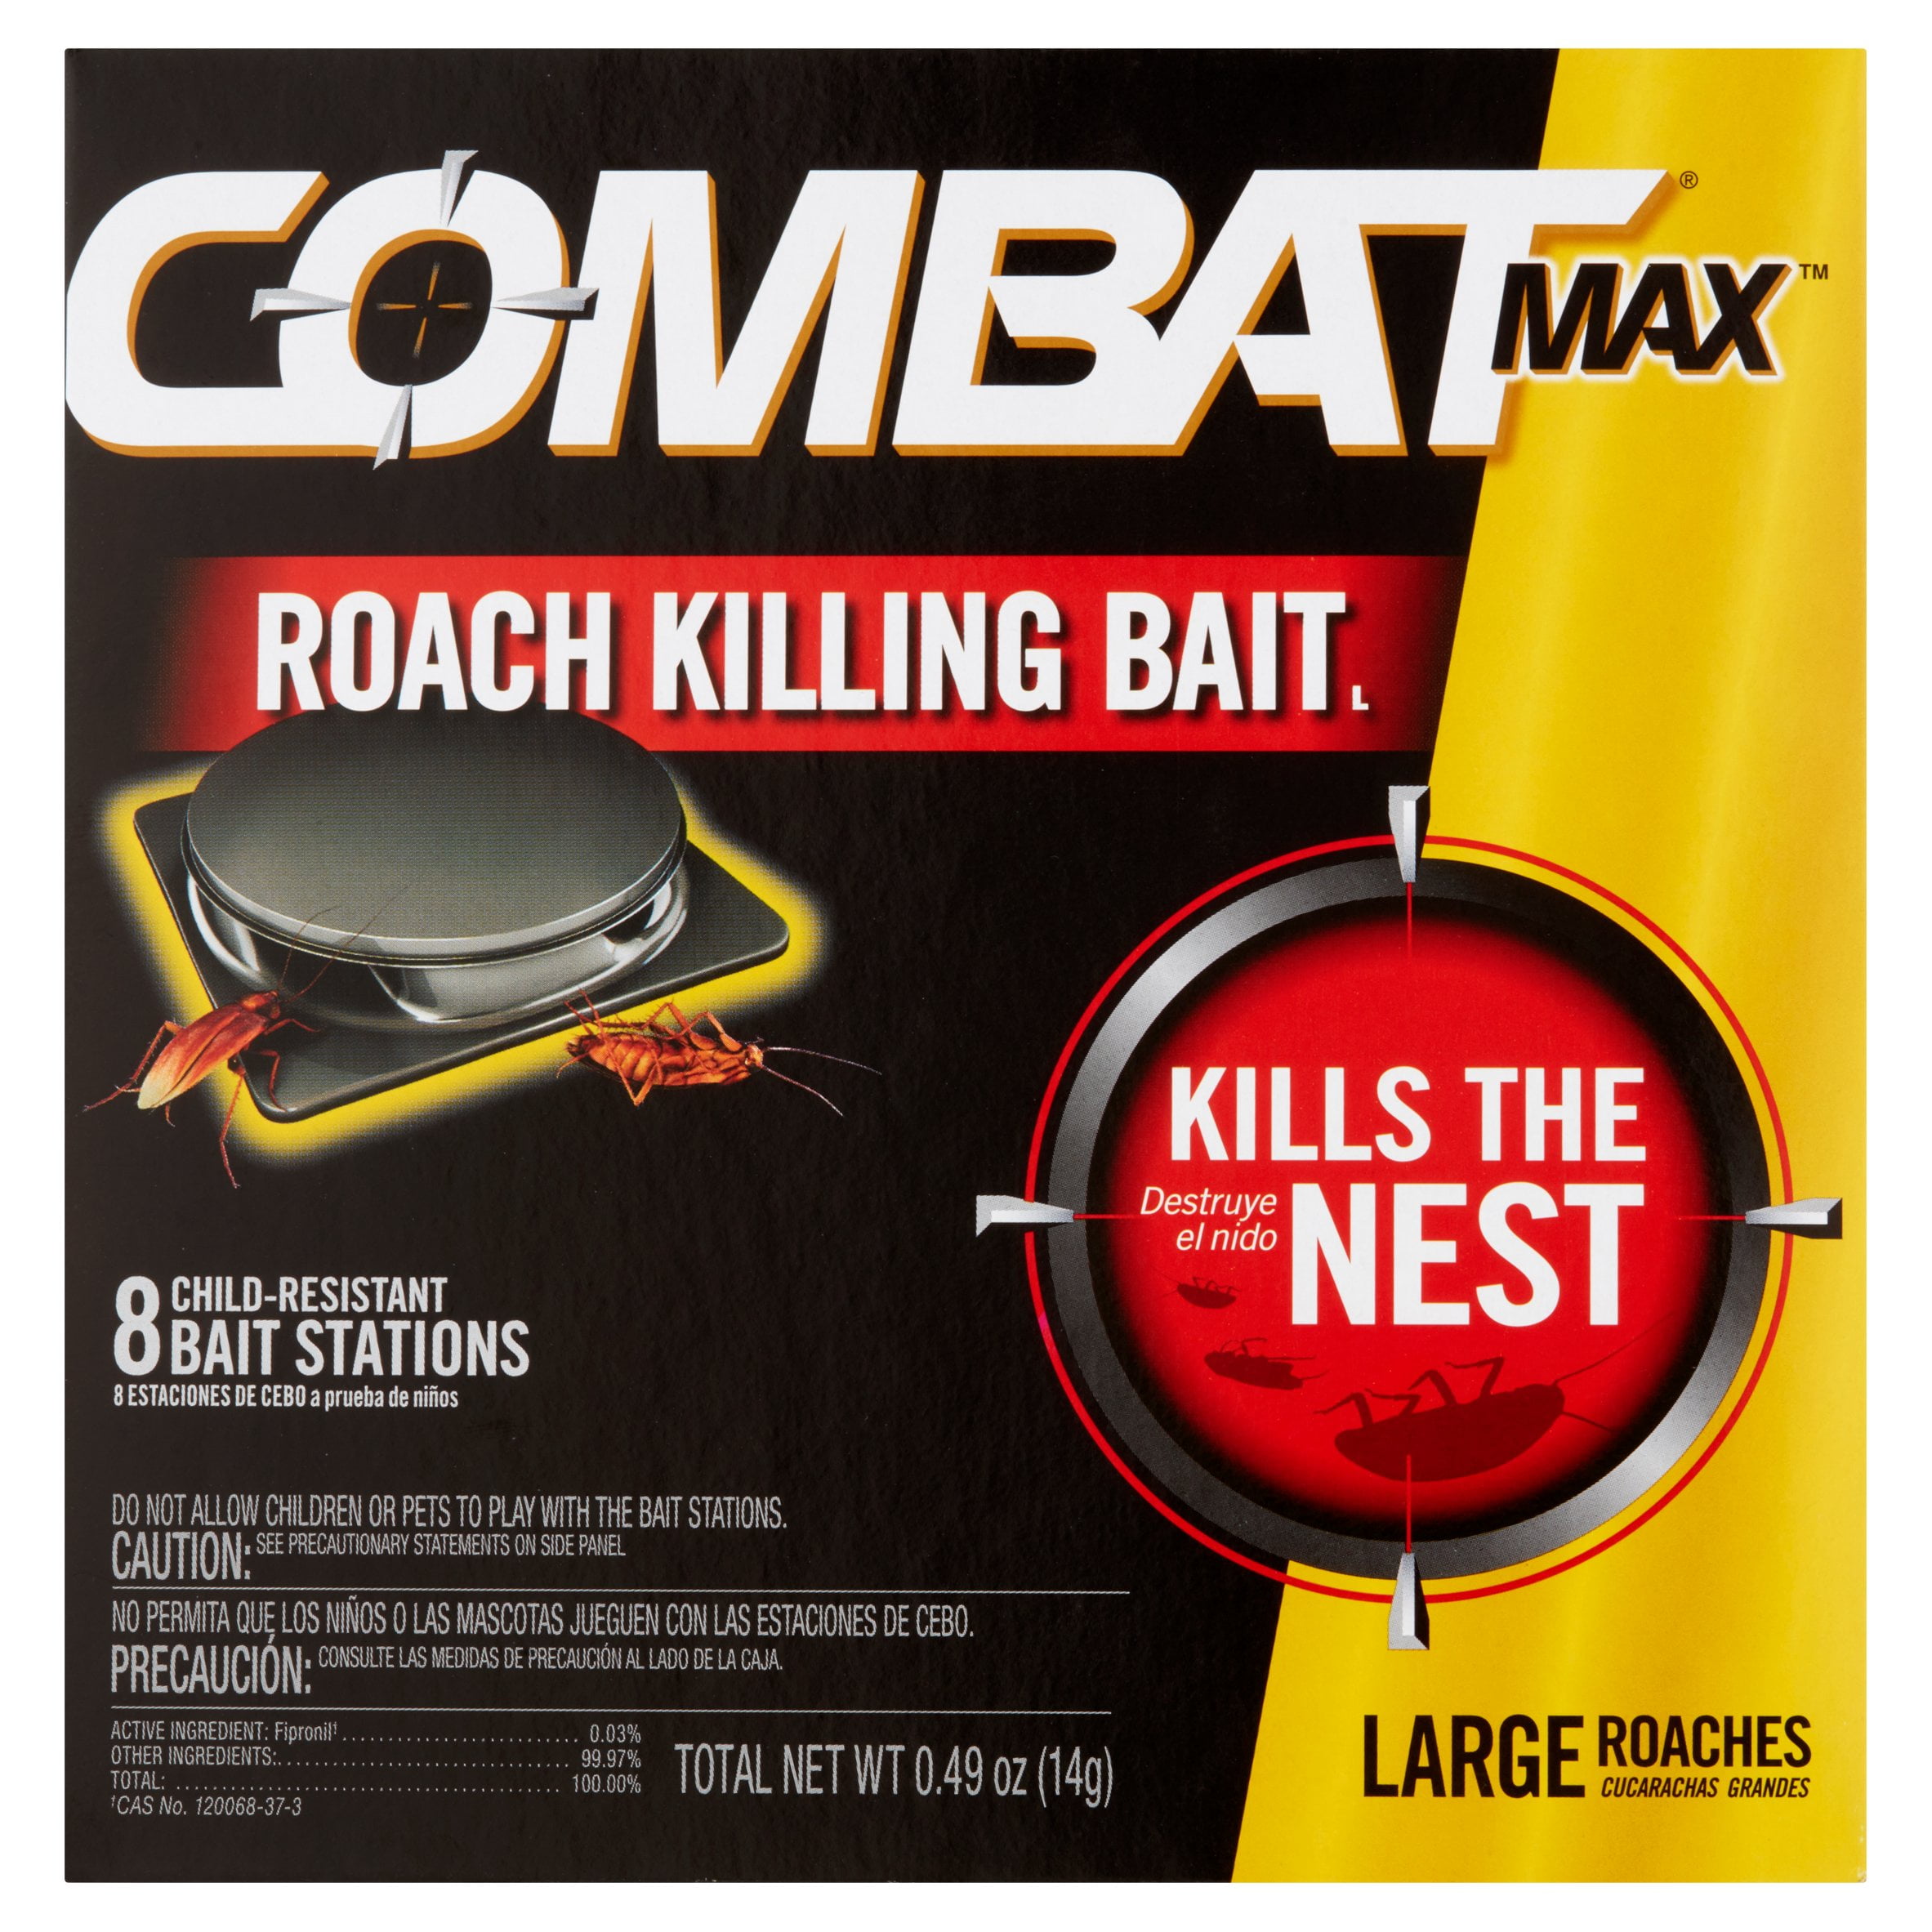 Do mothballs kill roaches?